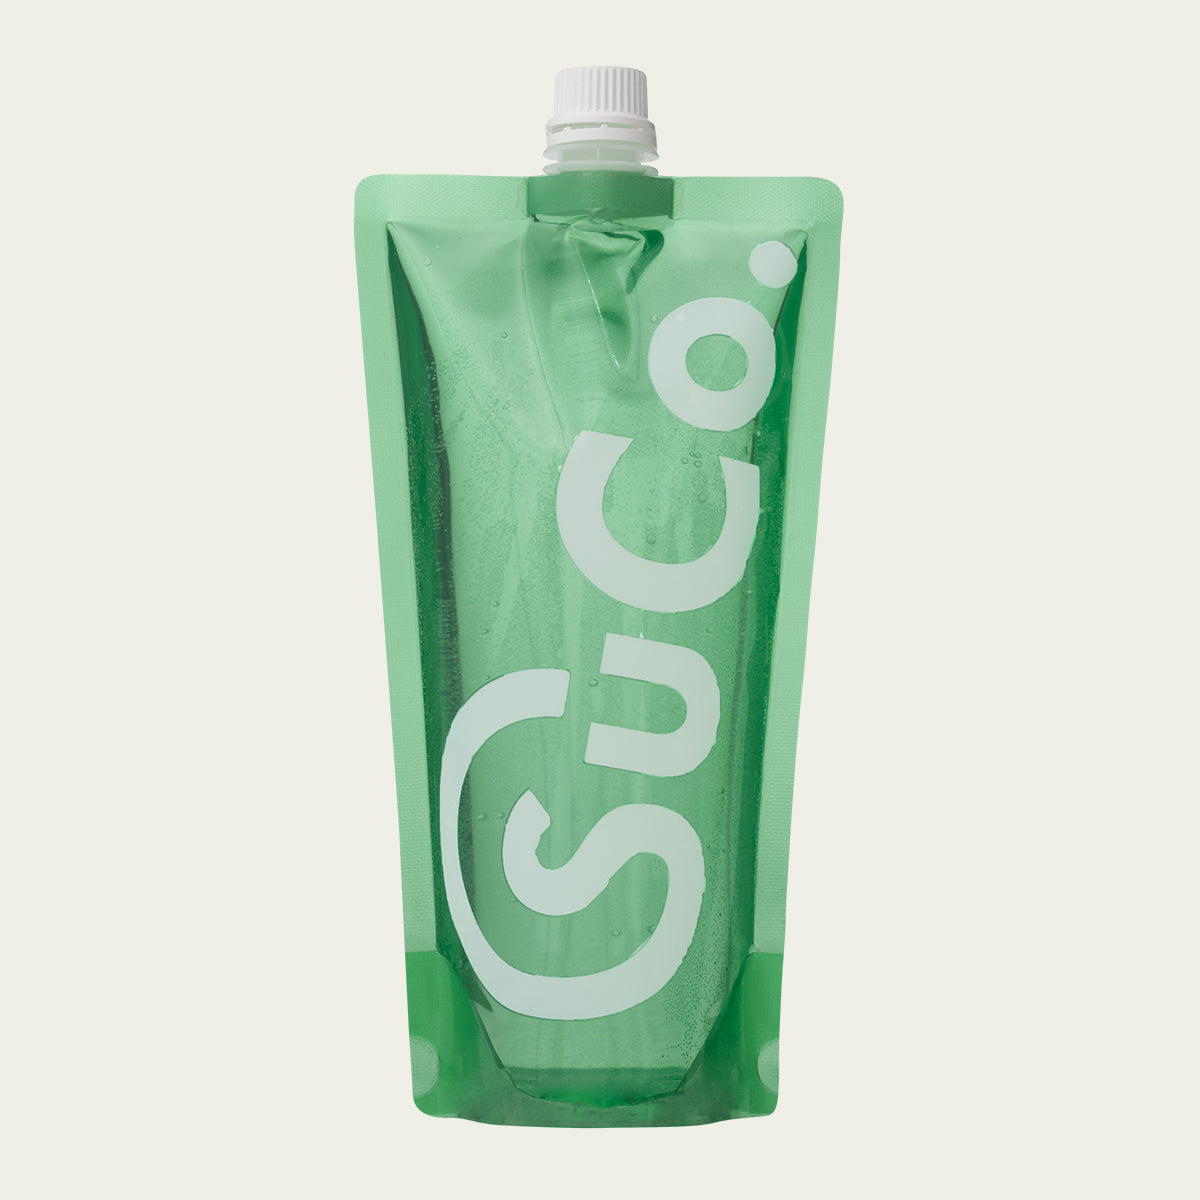 Mint SuCo 2.0 - 600 ml